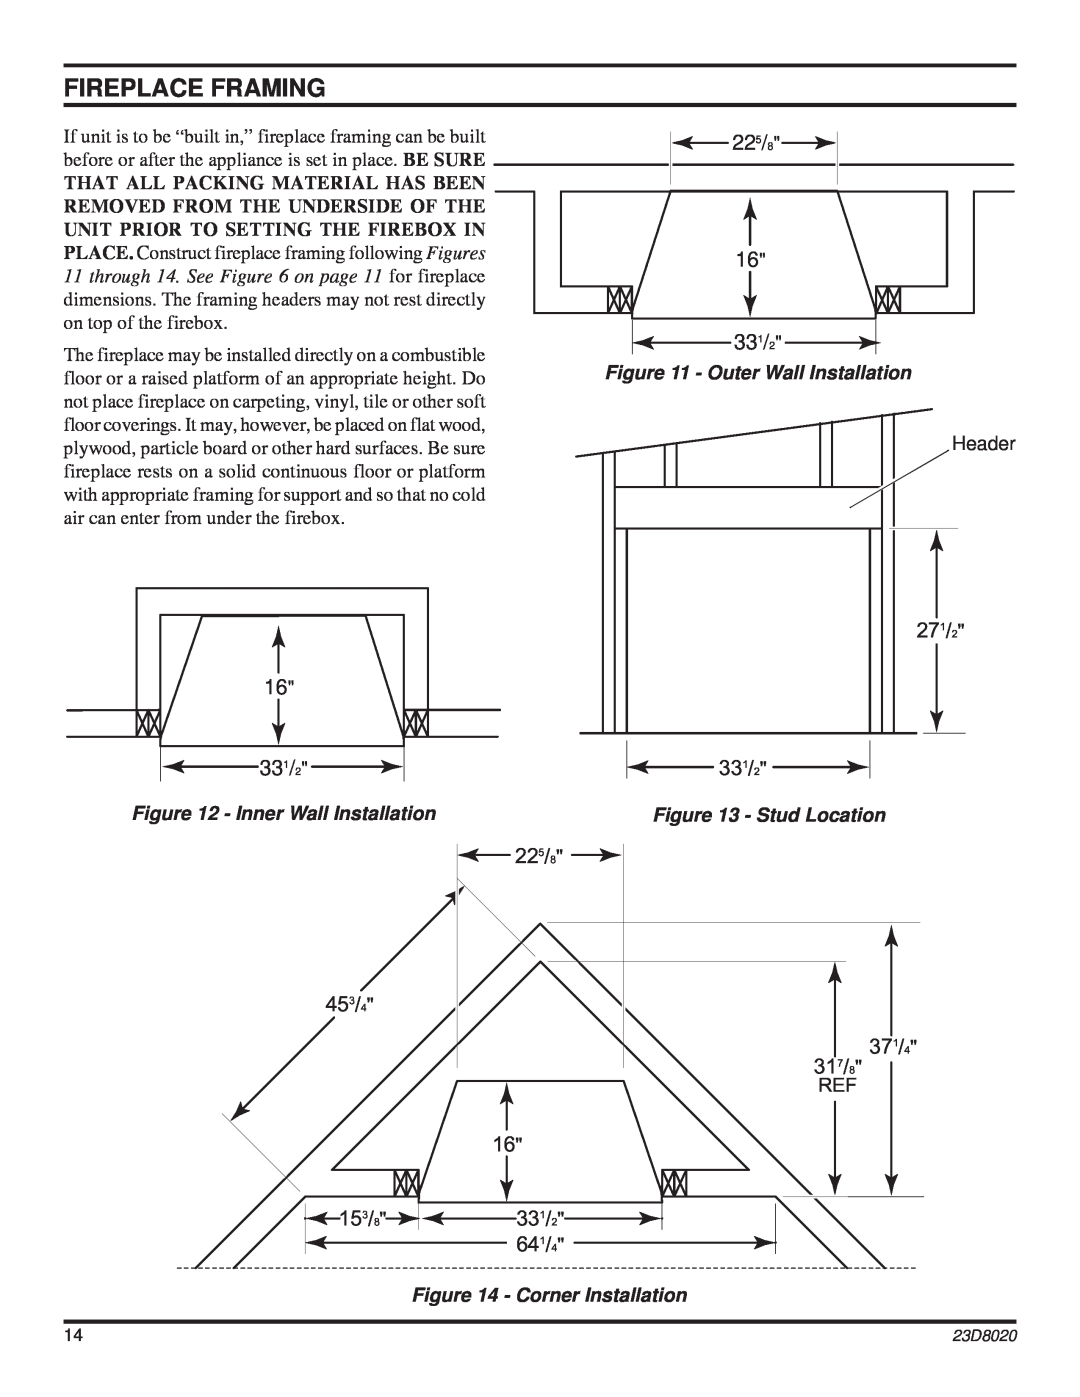 Monessen Hearth DIS33G manual Fireplace Framing, 271/2 331/2, 453/4 153/8, 225/8 16 331/2 641/4, 371/4 317/8, Header 